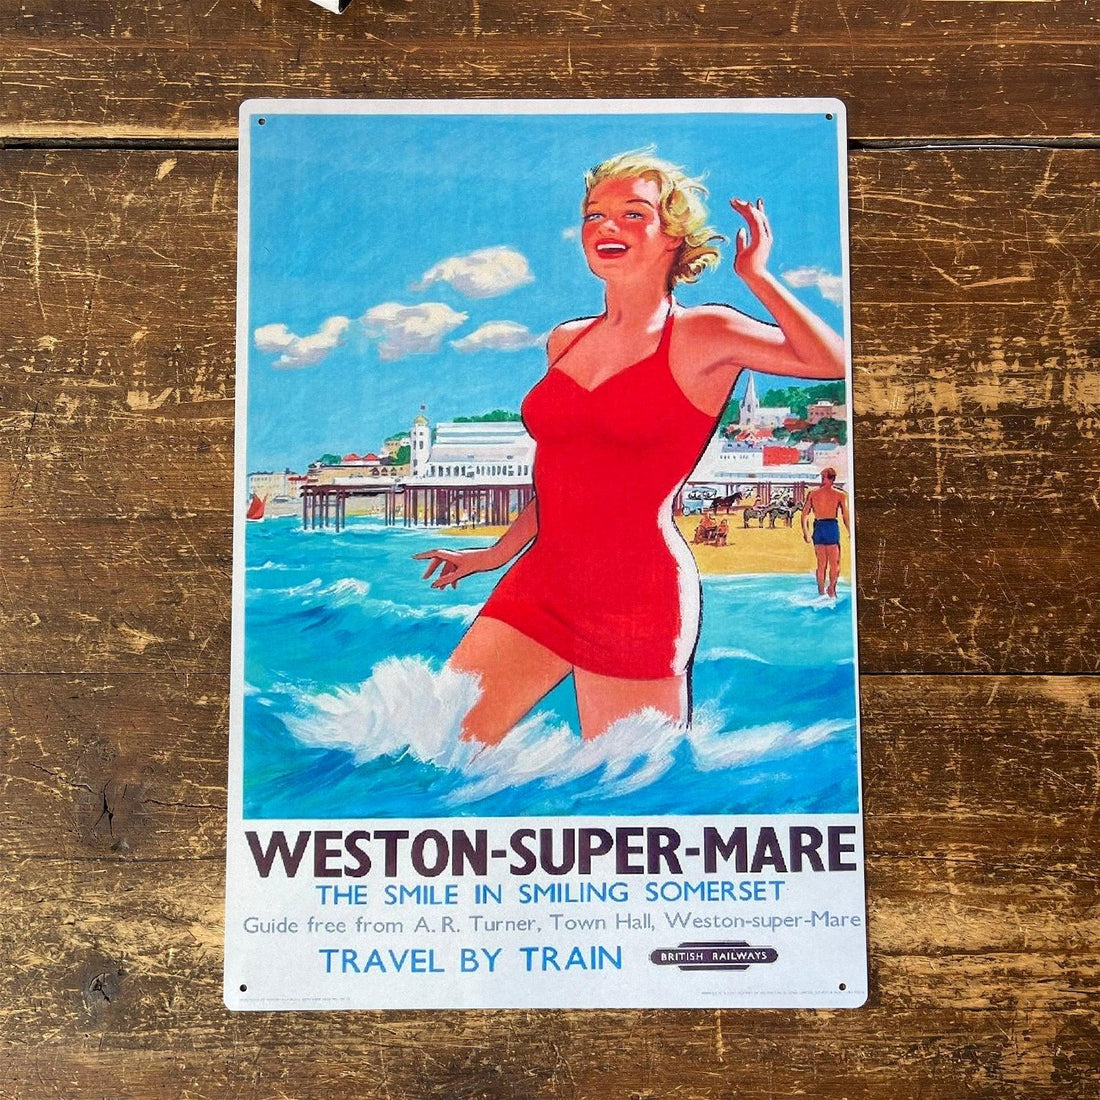 Vintage Metal Sign - British Railways Retro Advertising, Weston-Super-Mare, Somerset - £27.99 - Retro Advertising 